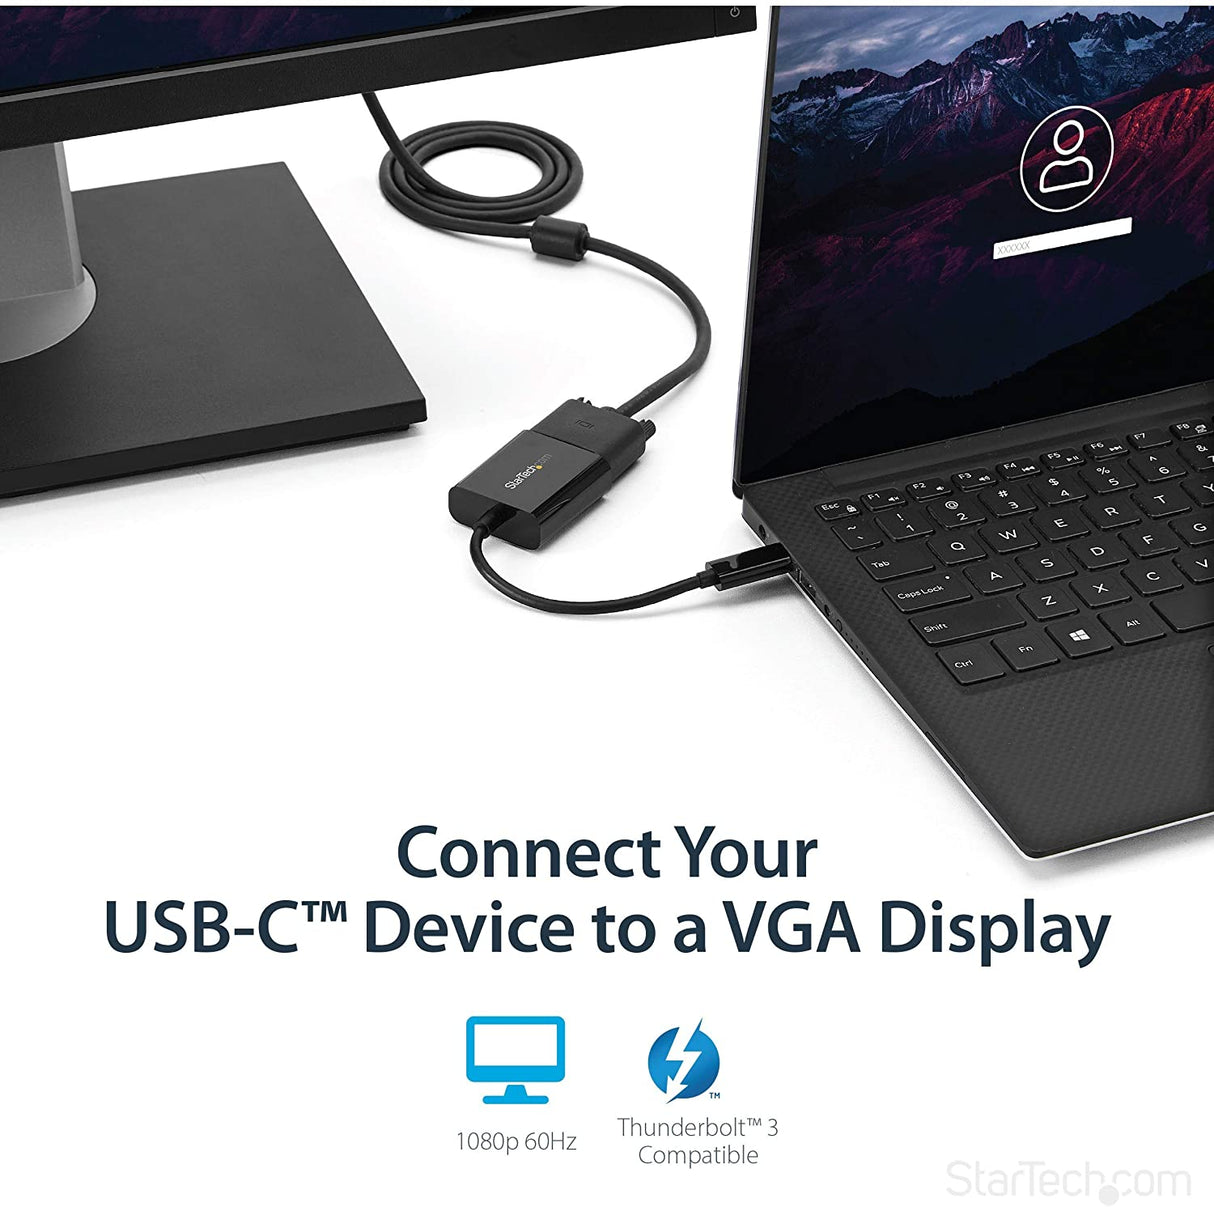 StarTech.com USB-C to VGA Adapter - Black - 1080p - Video Converter For Your MacBook Pro - USB C to VGA Display Dongle (CDP2VGA) Black 1080p